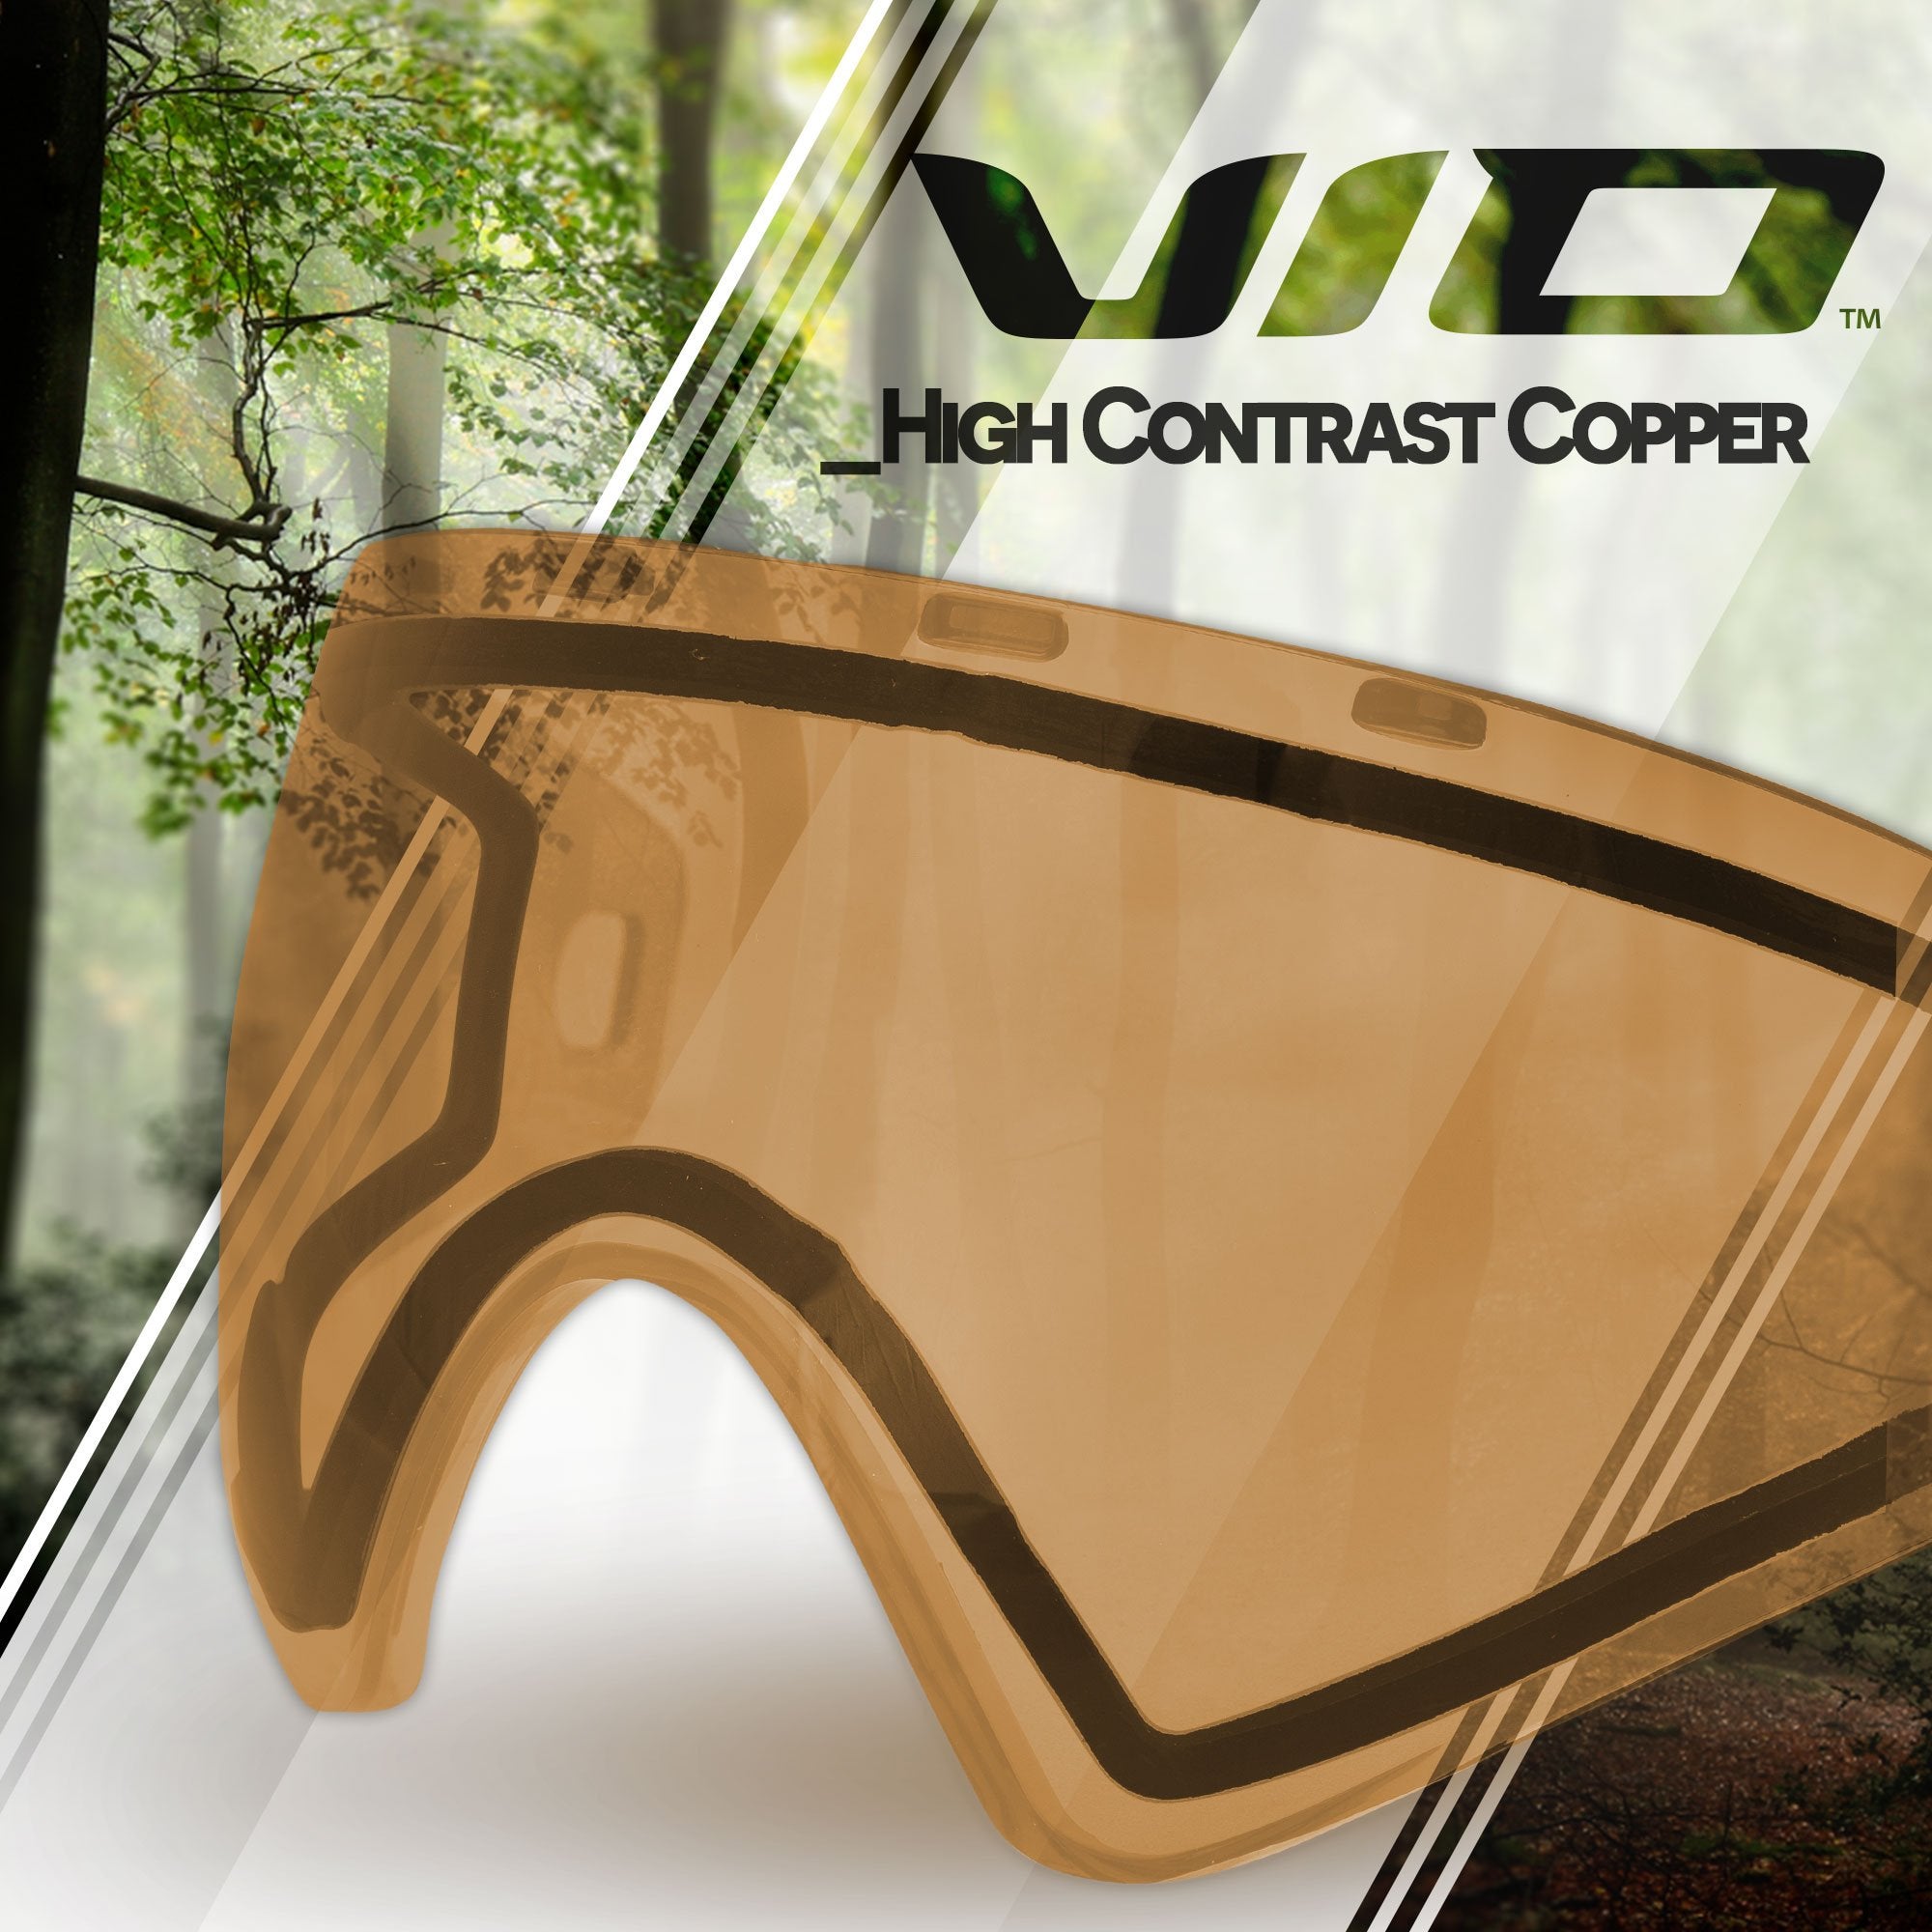 Virtue VIO Lens - Hi Contrast Copper